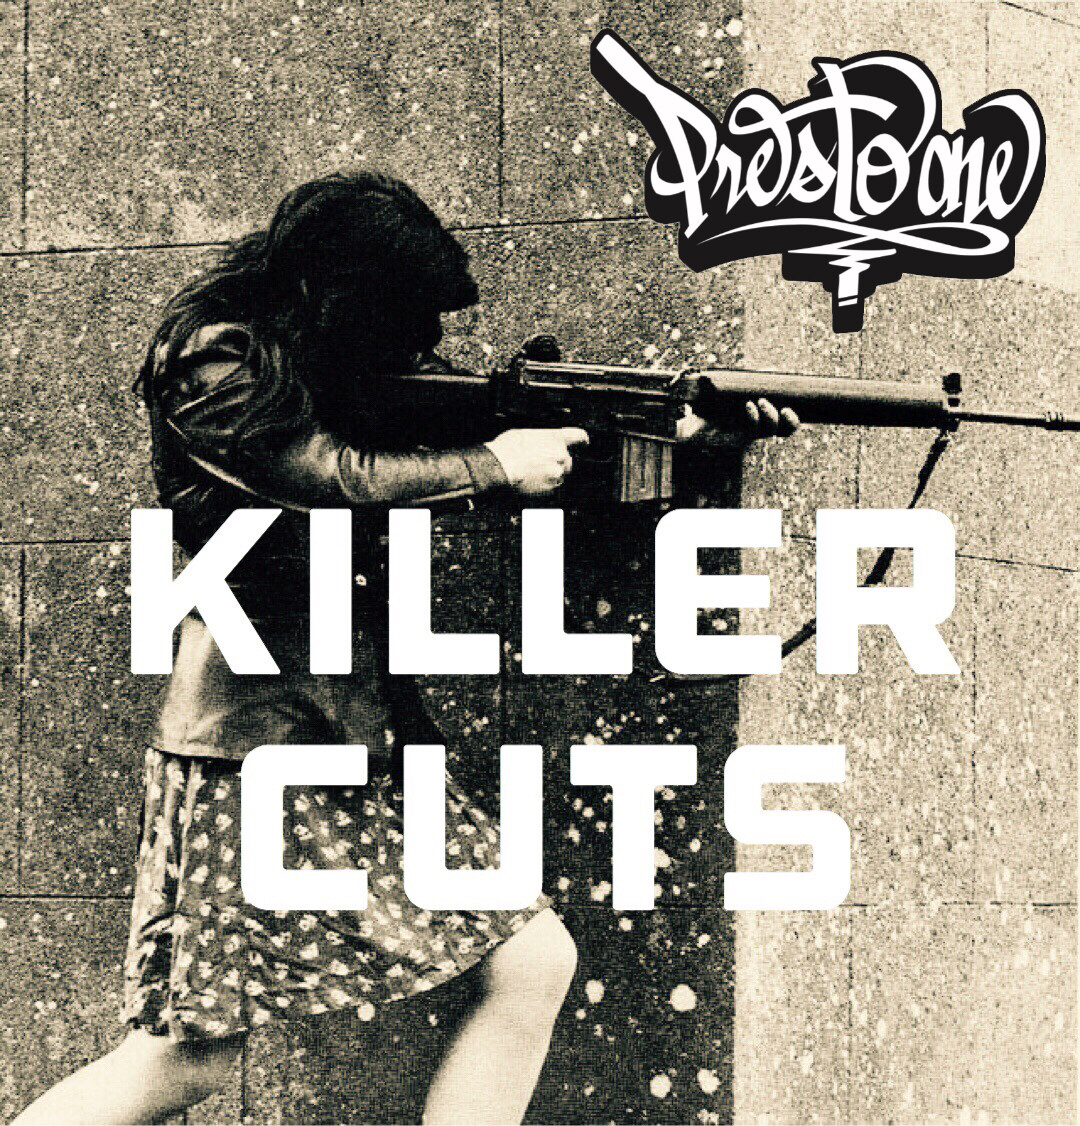 Killer Cuts